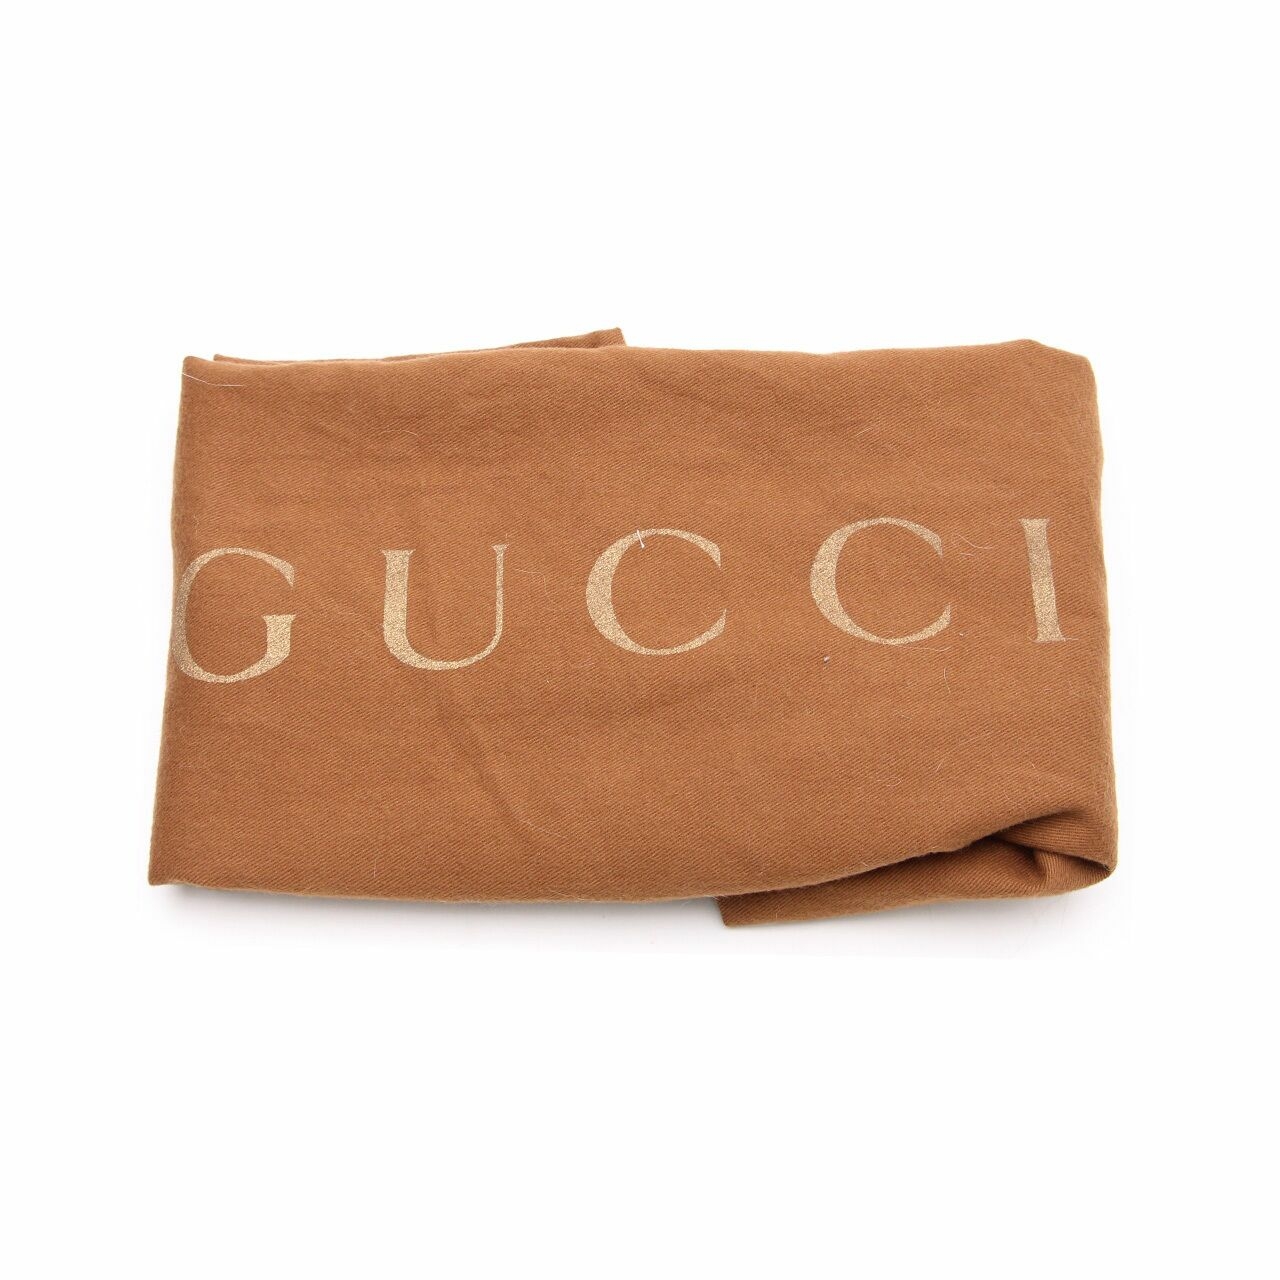 Gucci Beige Original GG Canvas Tote Bag